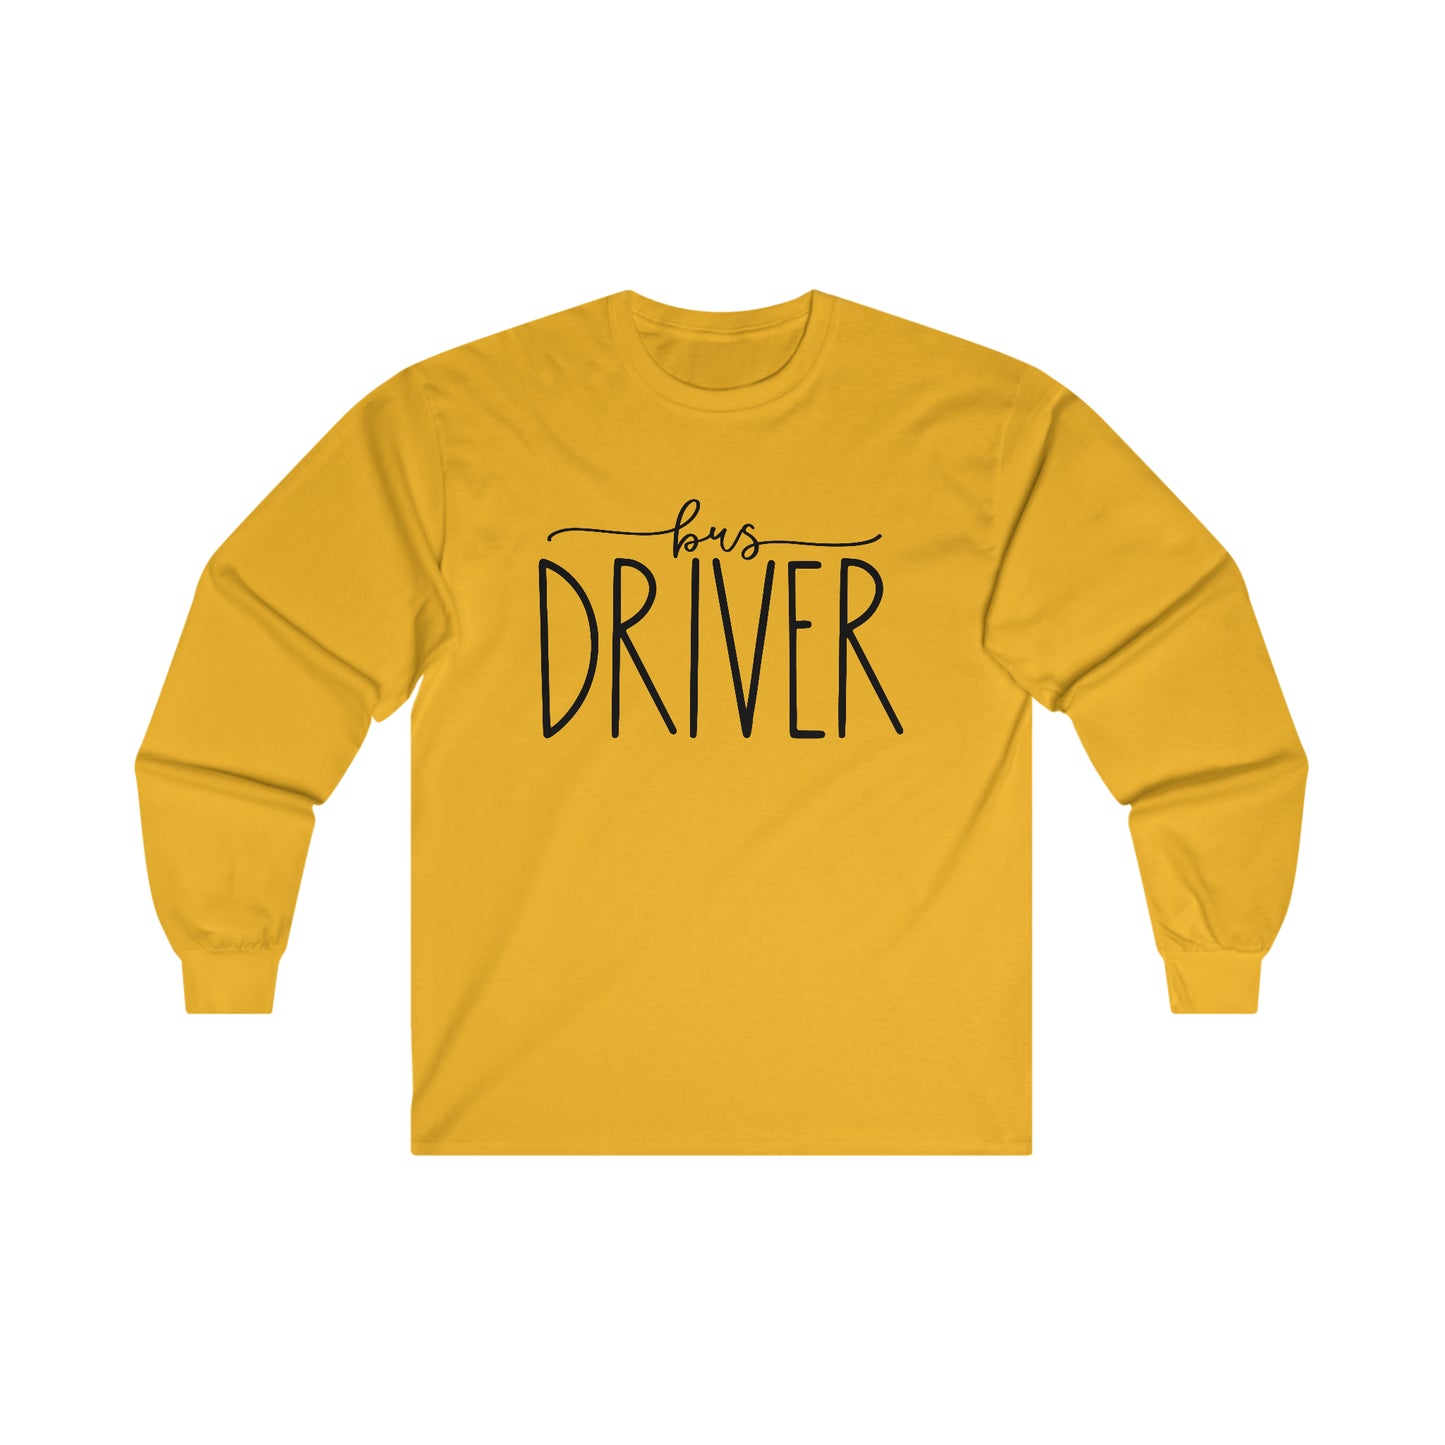 Driver Long Sleeve Shirt